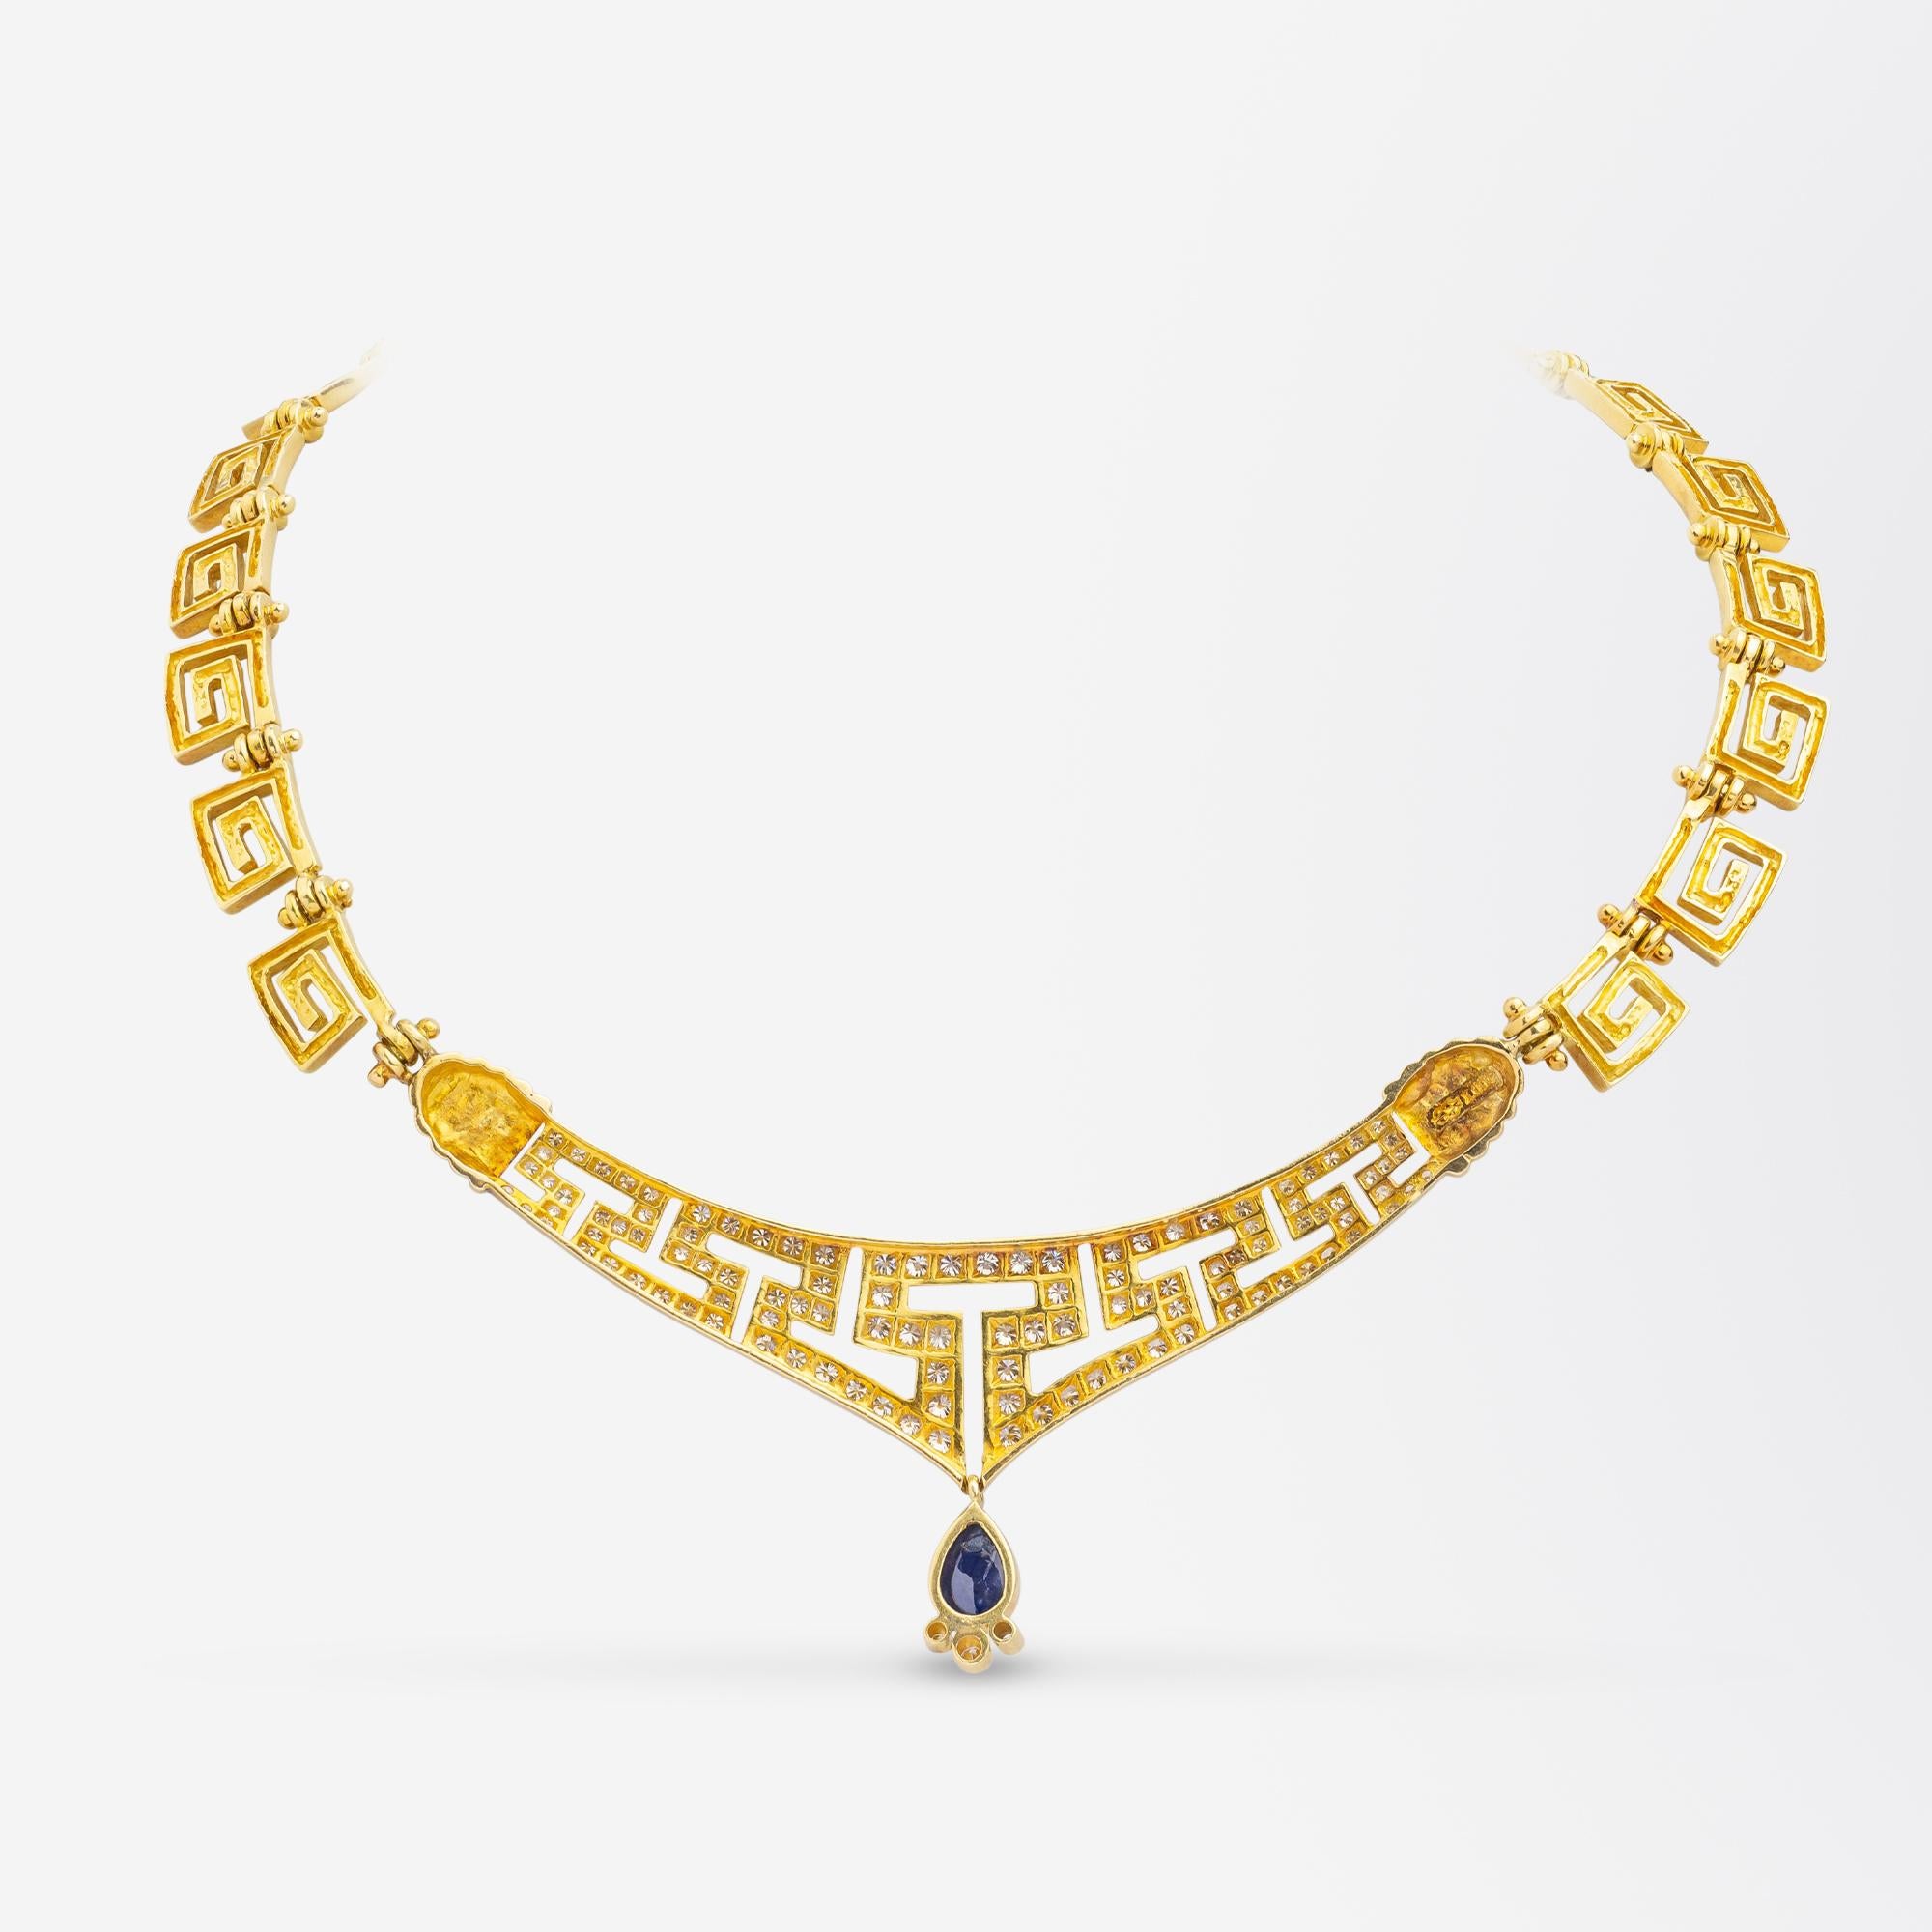 Modern Greek Key Necklet in 18 Karat Gold With Diamonds & a Central Sapphire